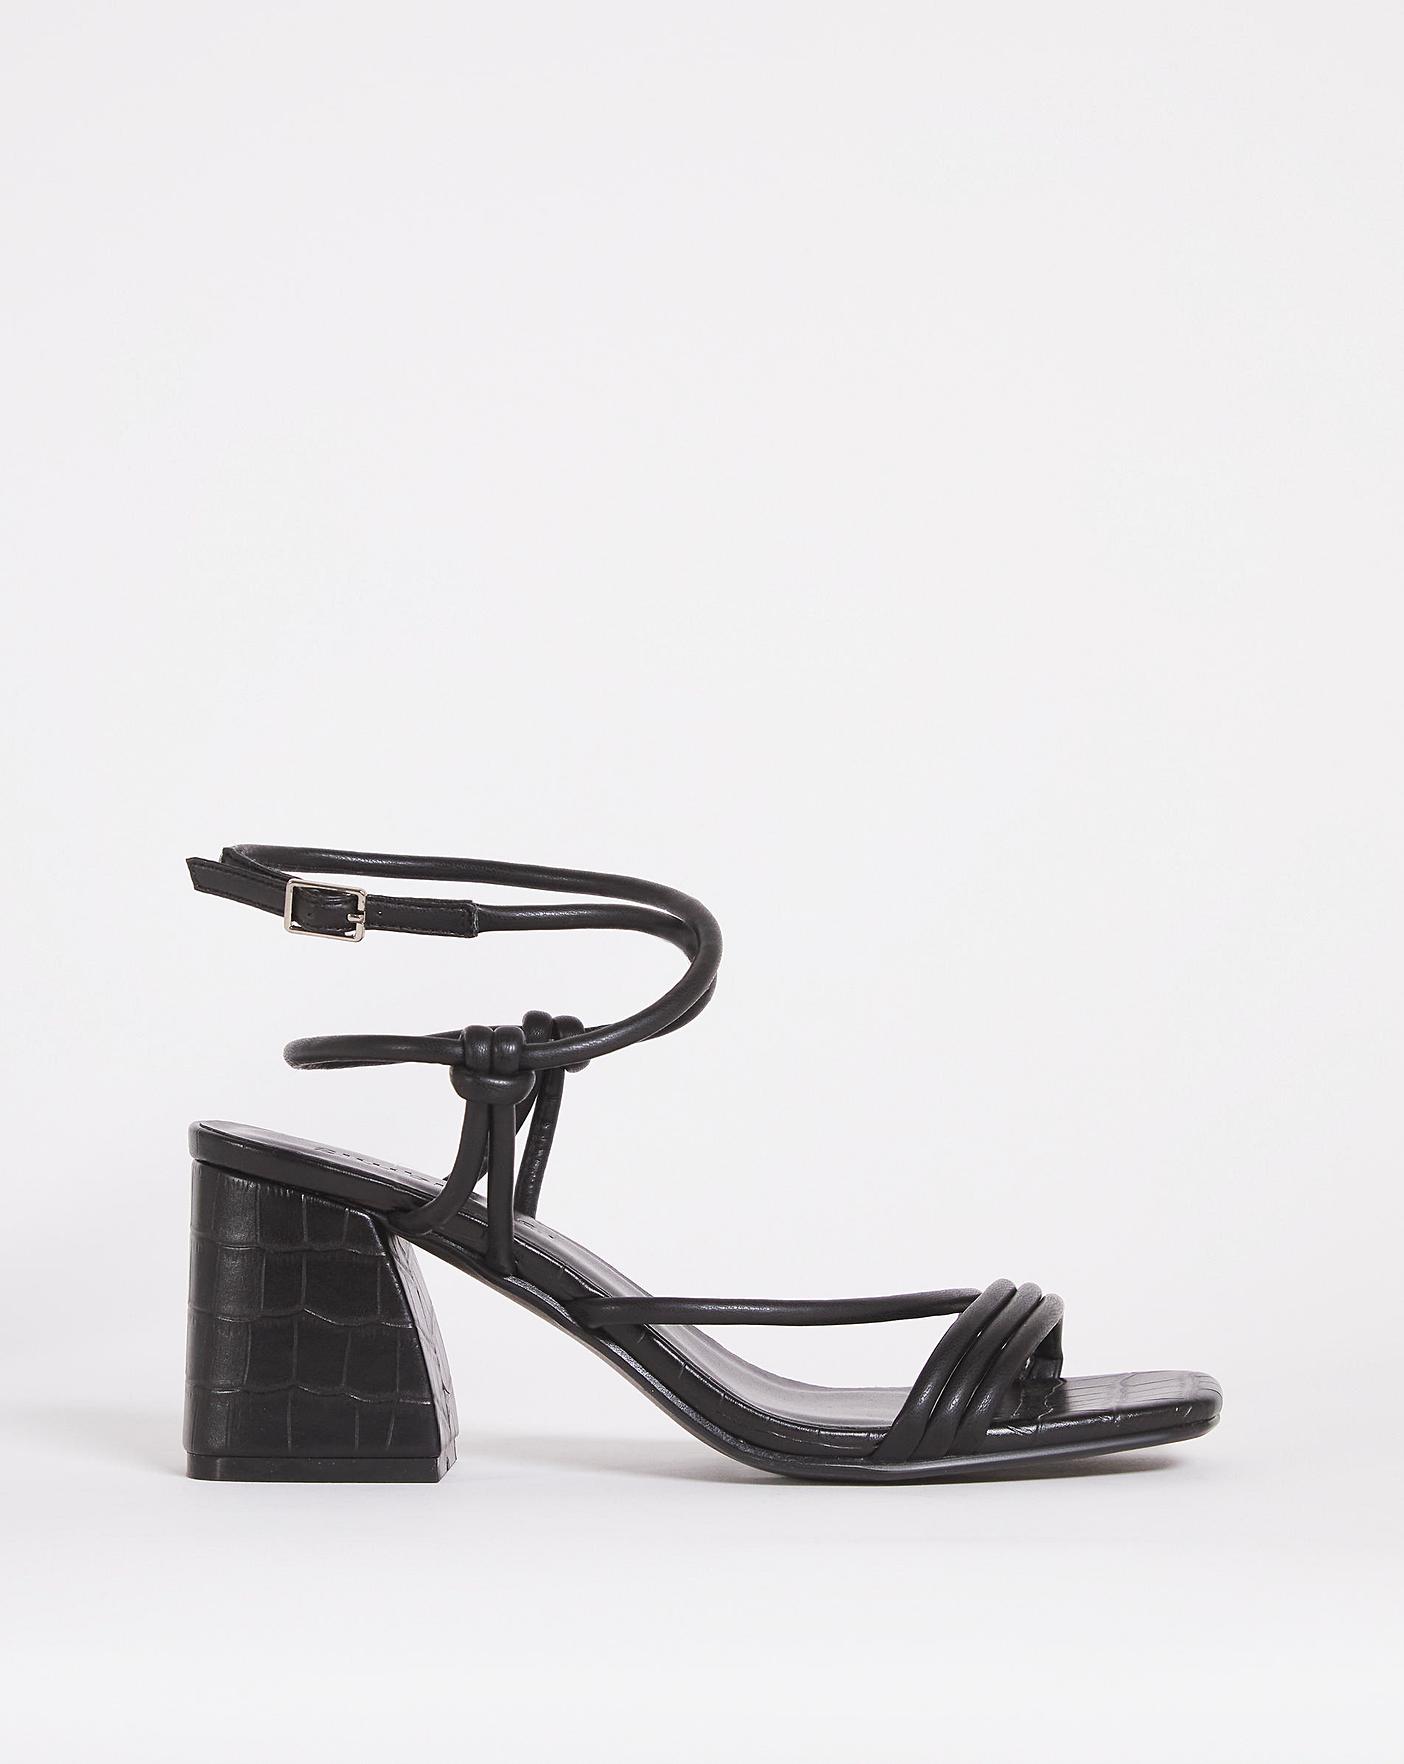 Buy Black Heeled Sandals for Women by CLARKS Online | Ajio.com